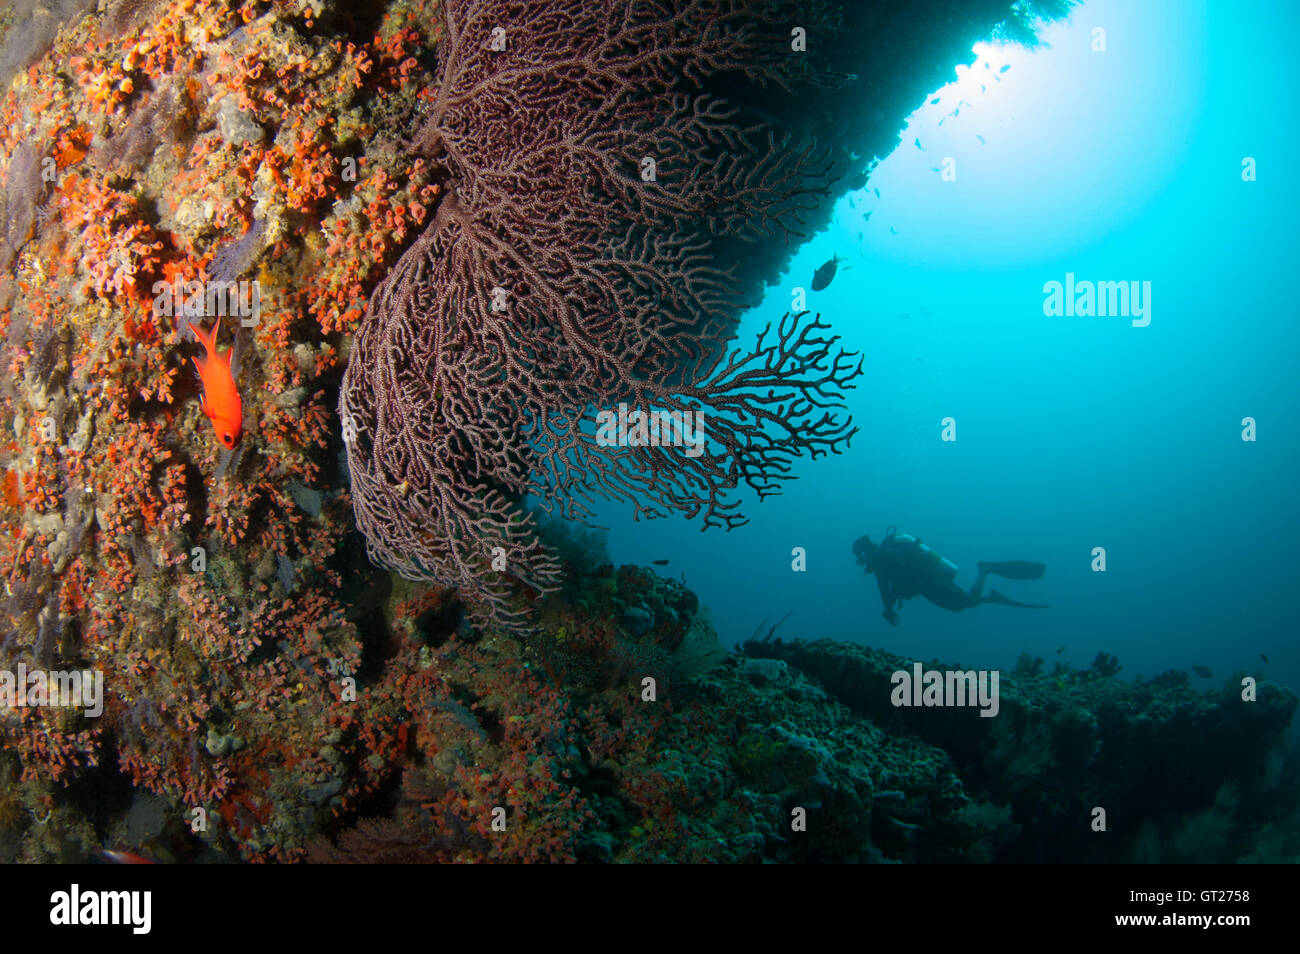 Gorgonian fan coral with diver silhouette at Kuda Rah Thila, Maldives Stock Photo